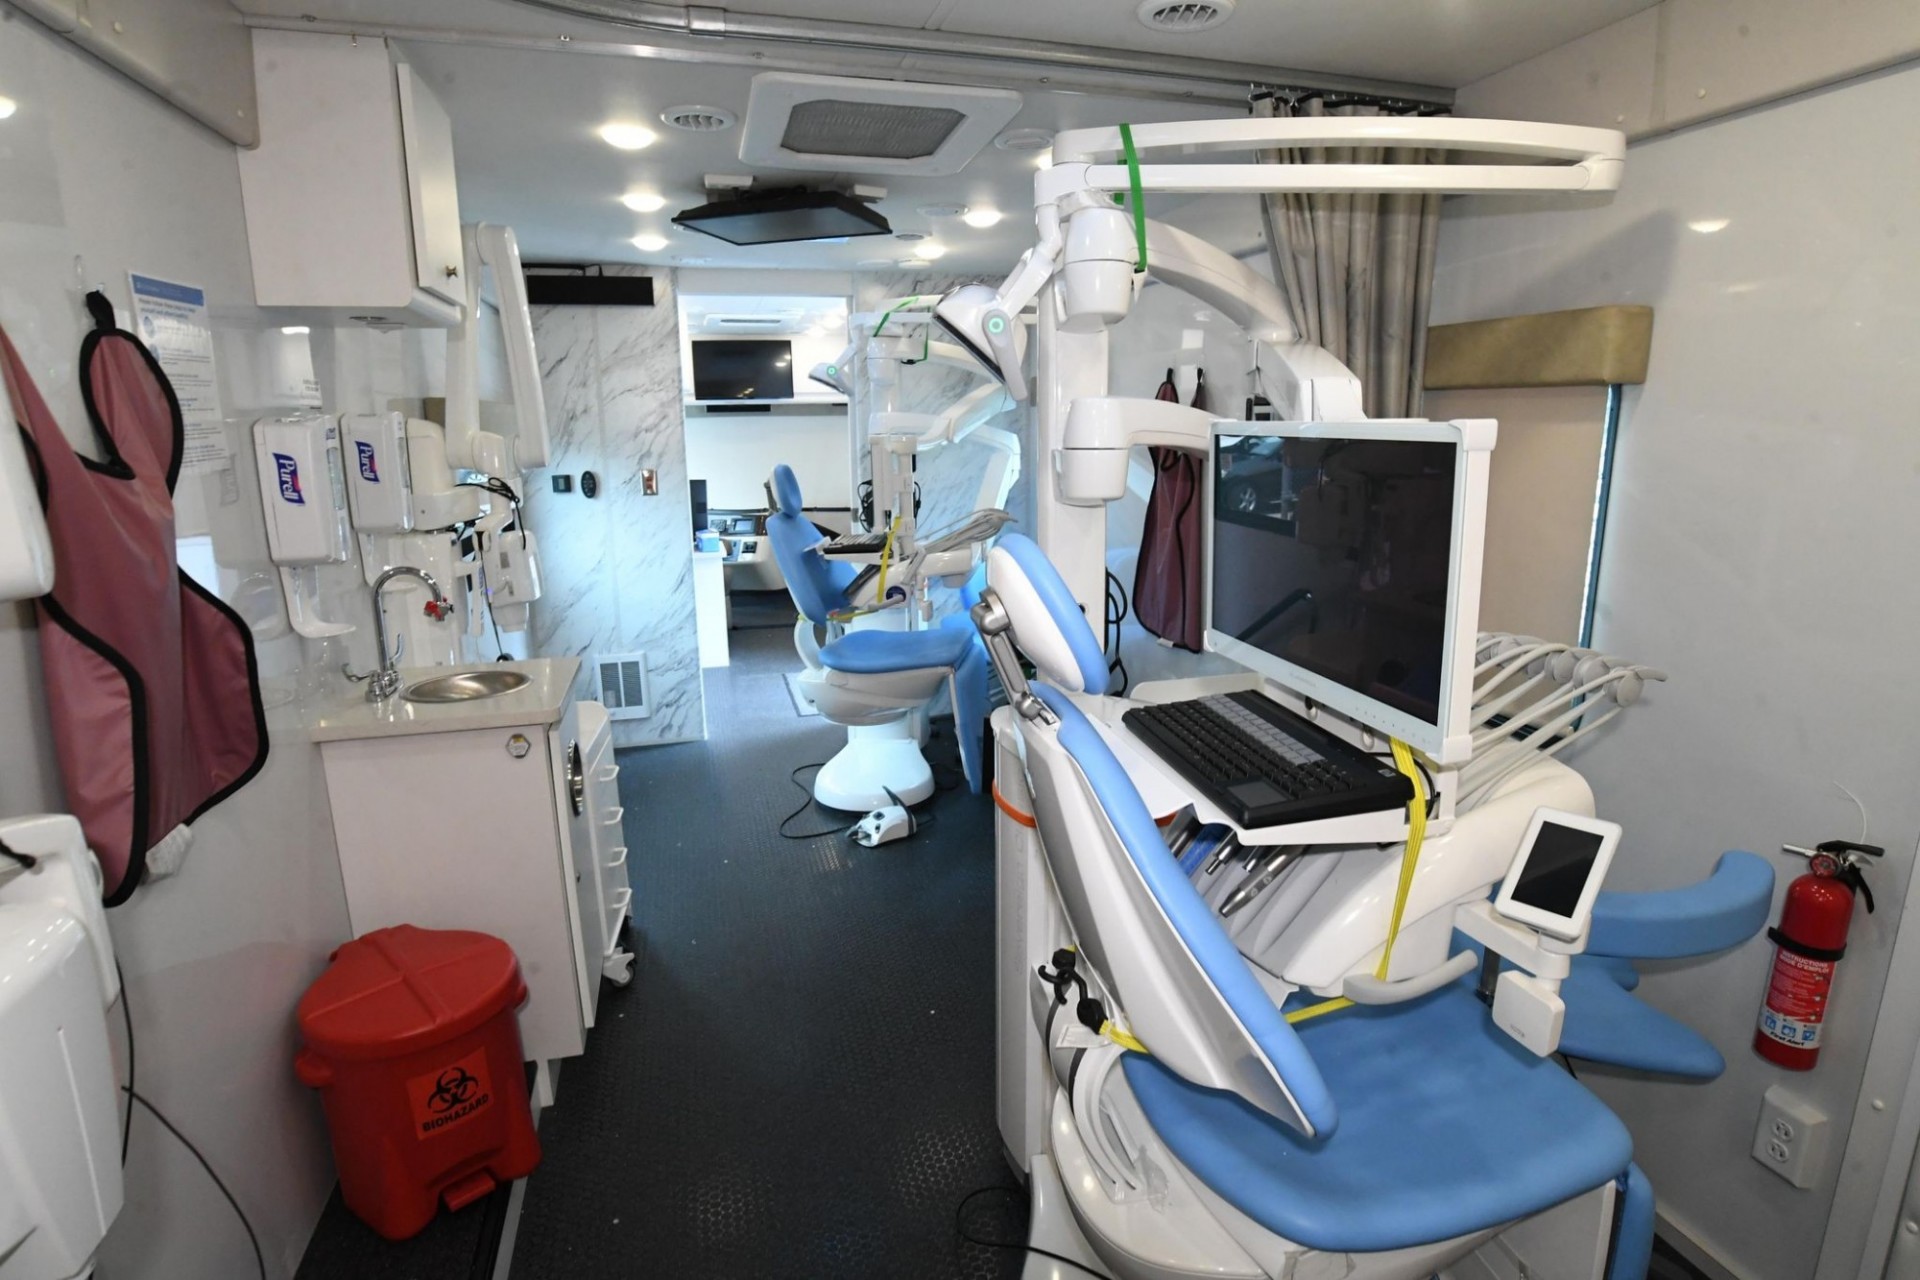 A look at the interior of the dental van